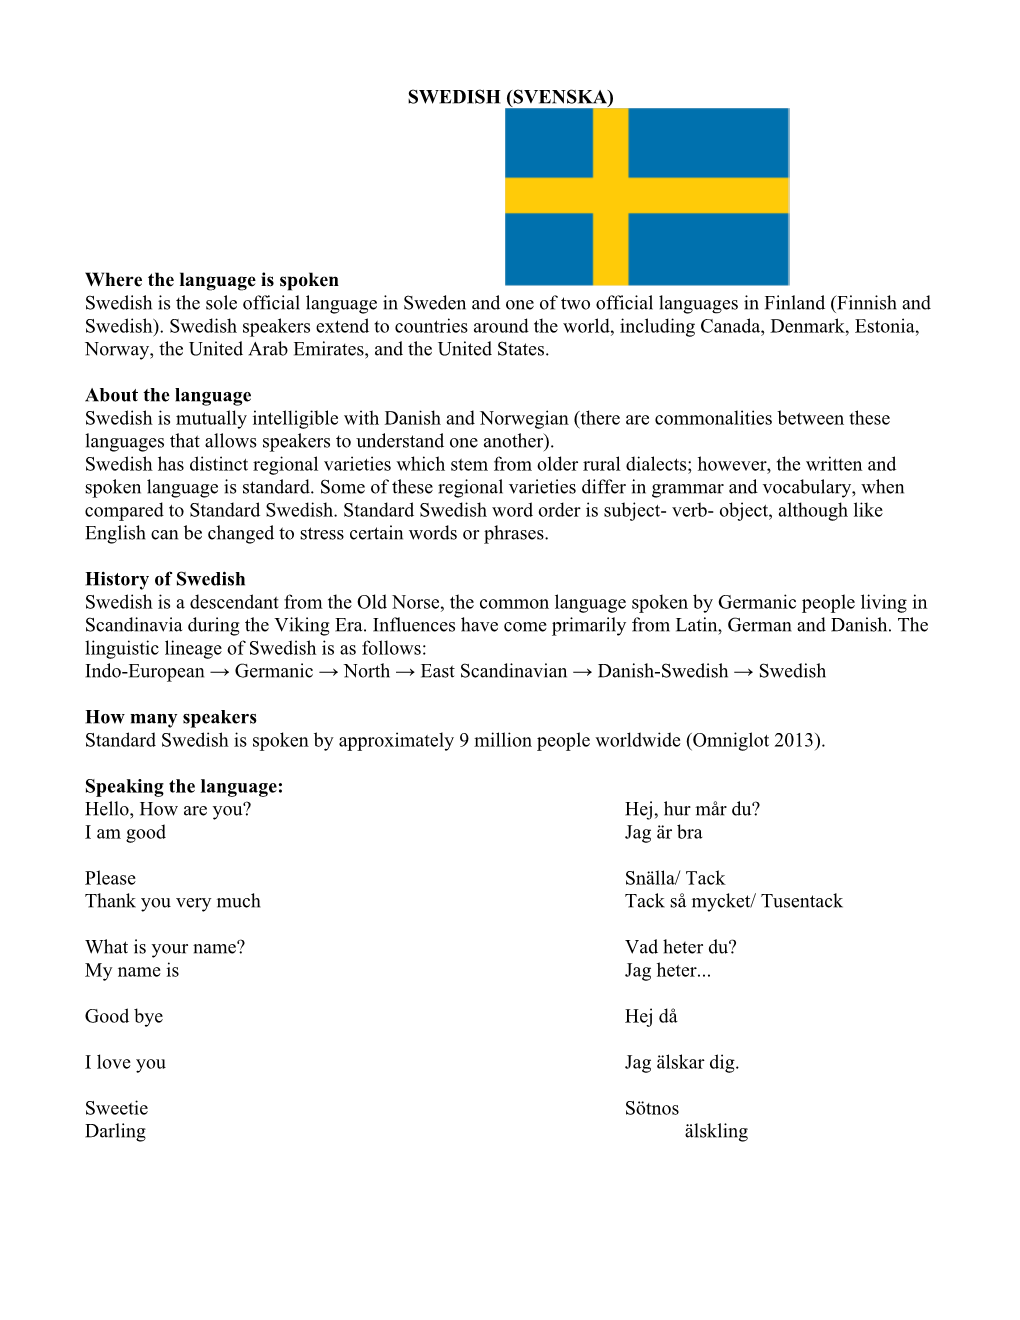 SWEDISH (SVENSKA) Where the Language Is Spoken Swedish Is The